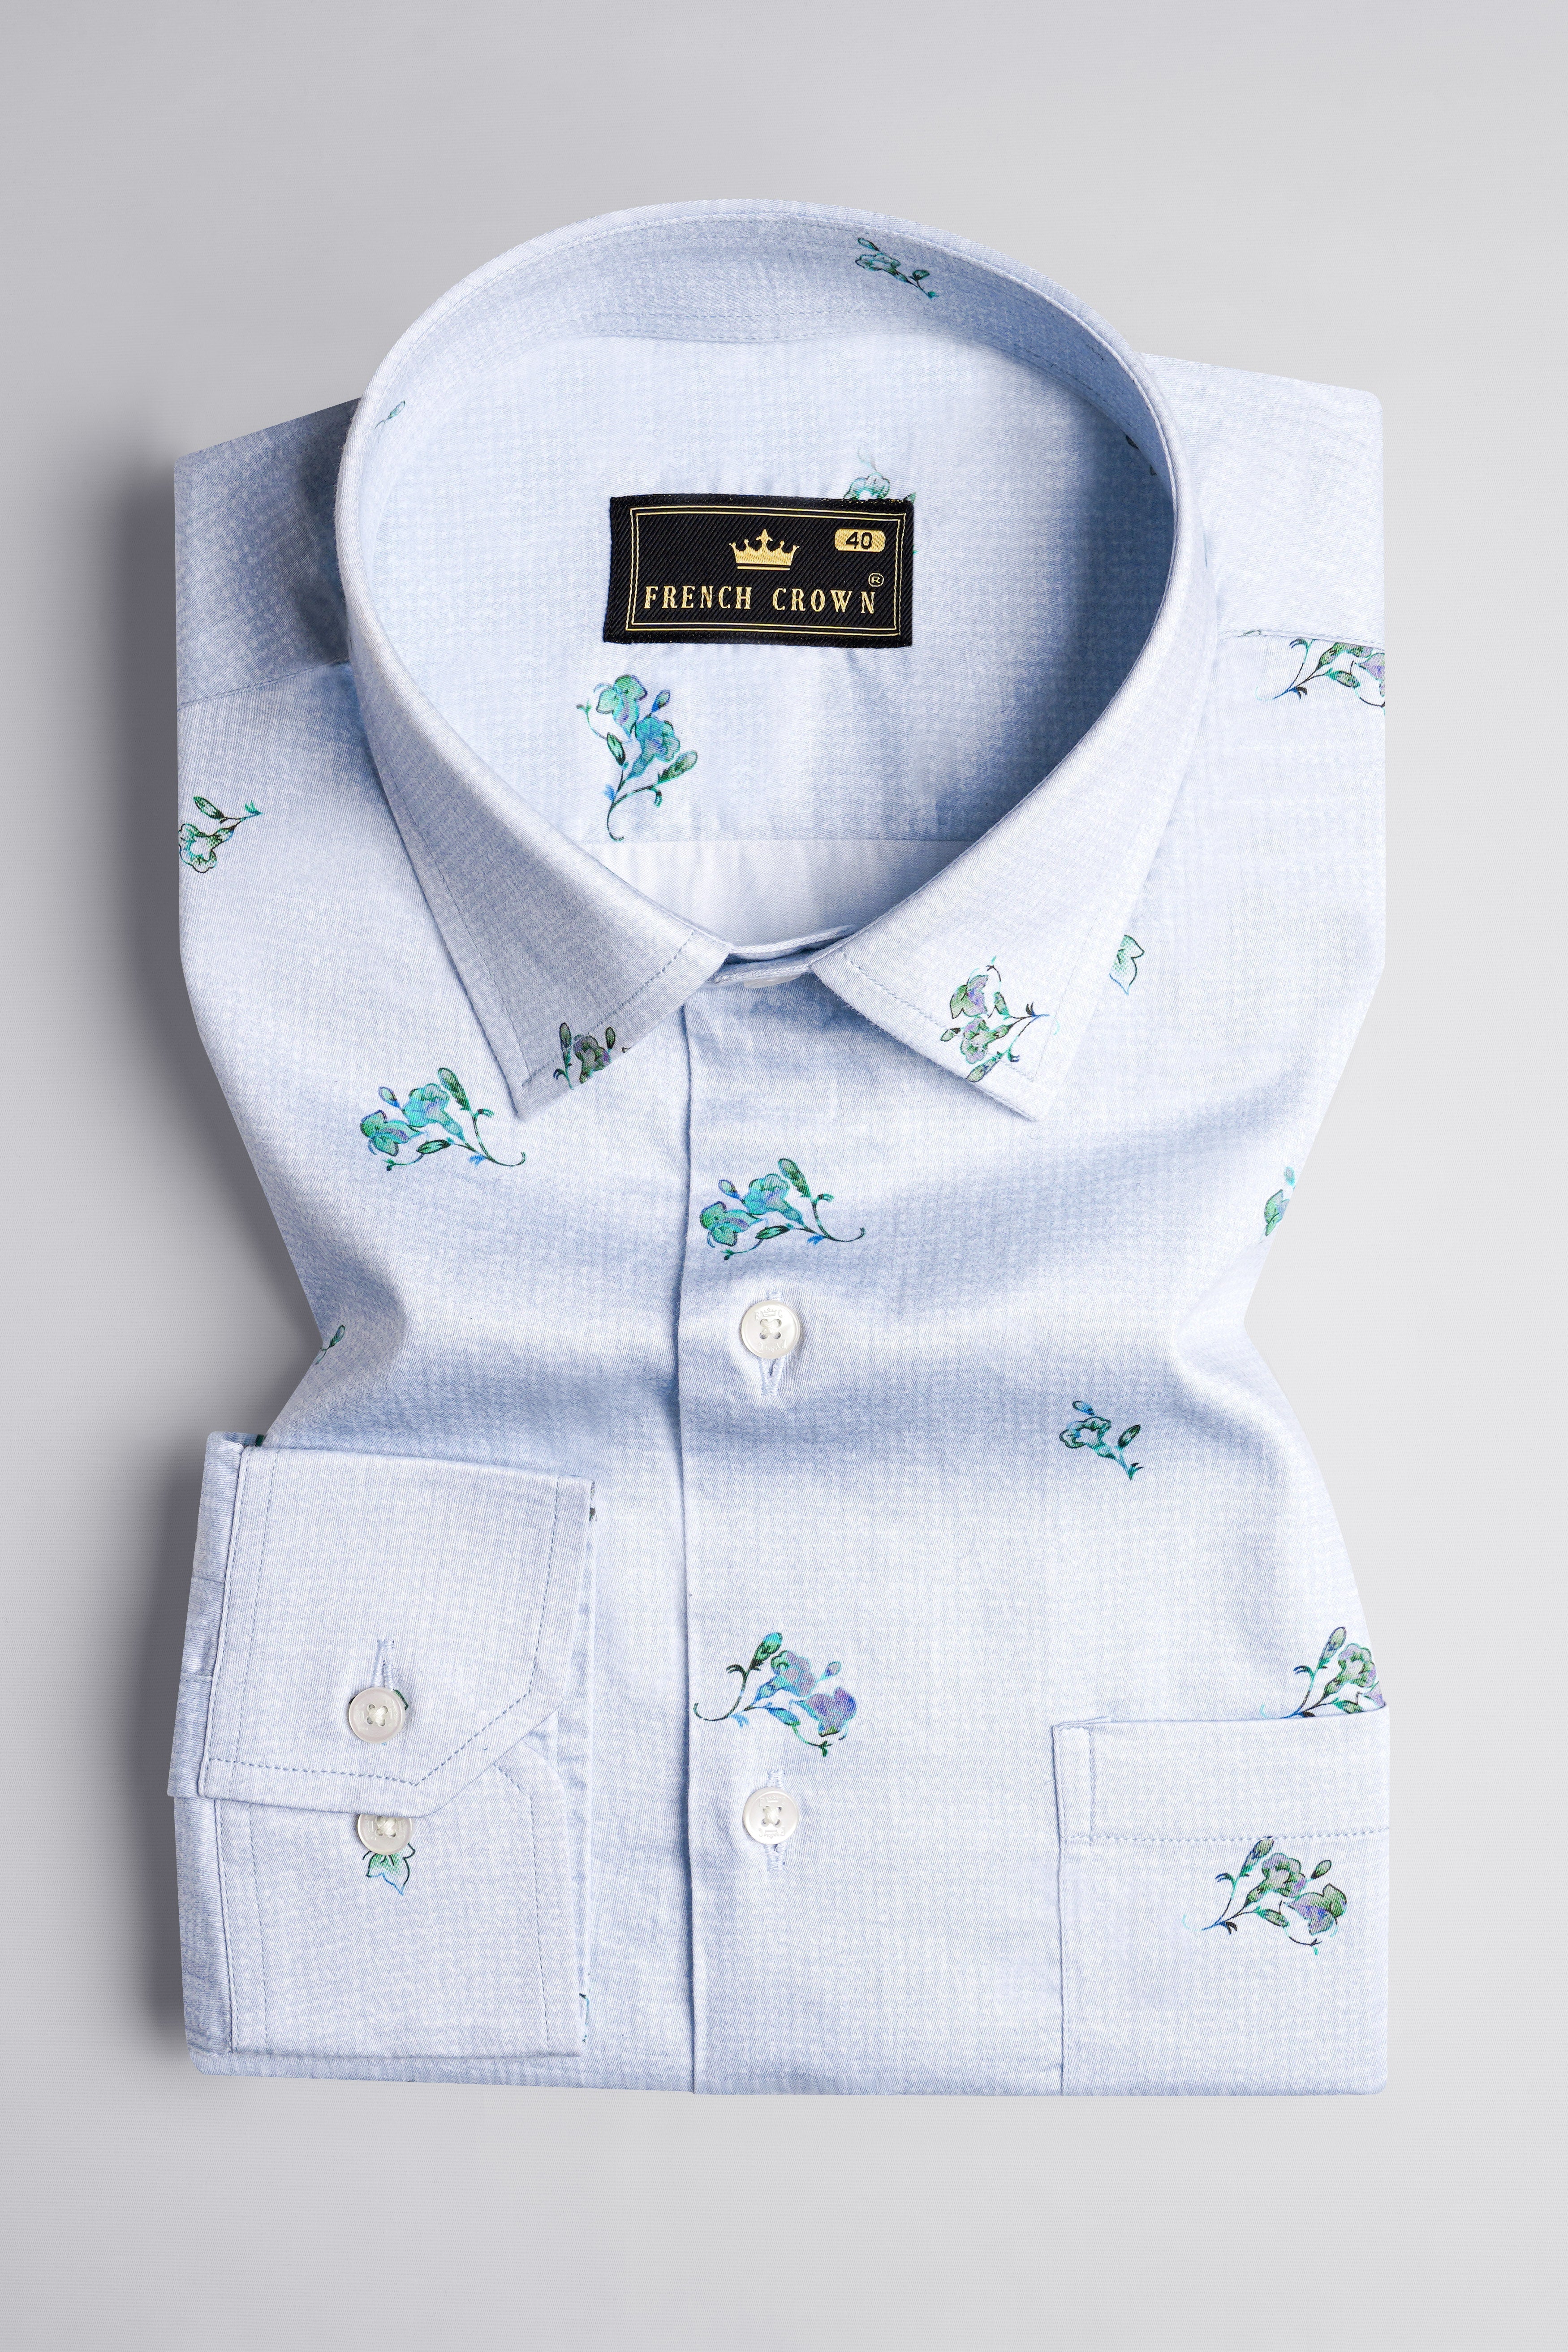 Gainsboro Gray with Wistflul Blue Floral Printed Super Soft Premium Cotton Shirt